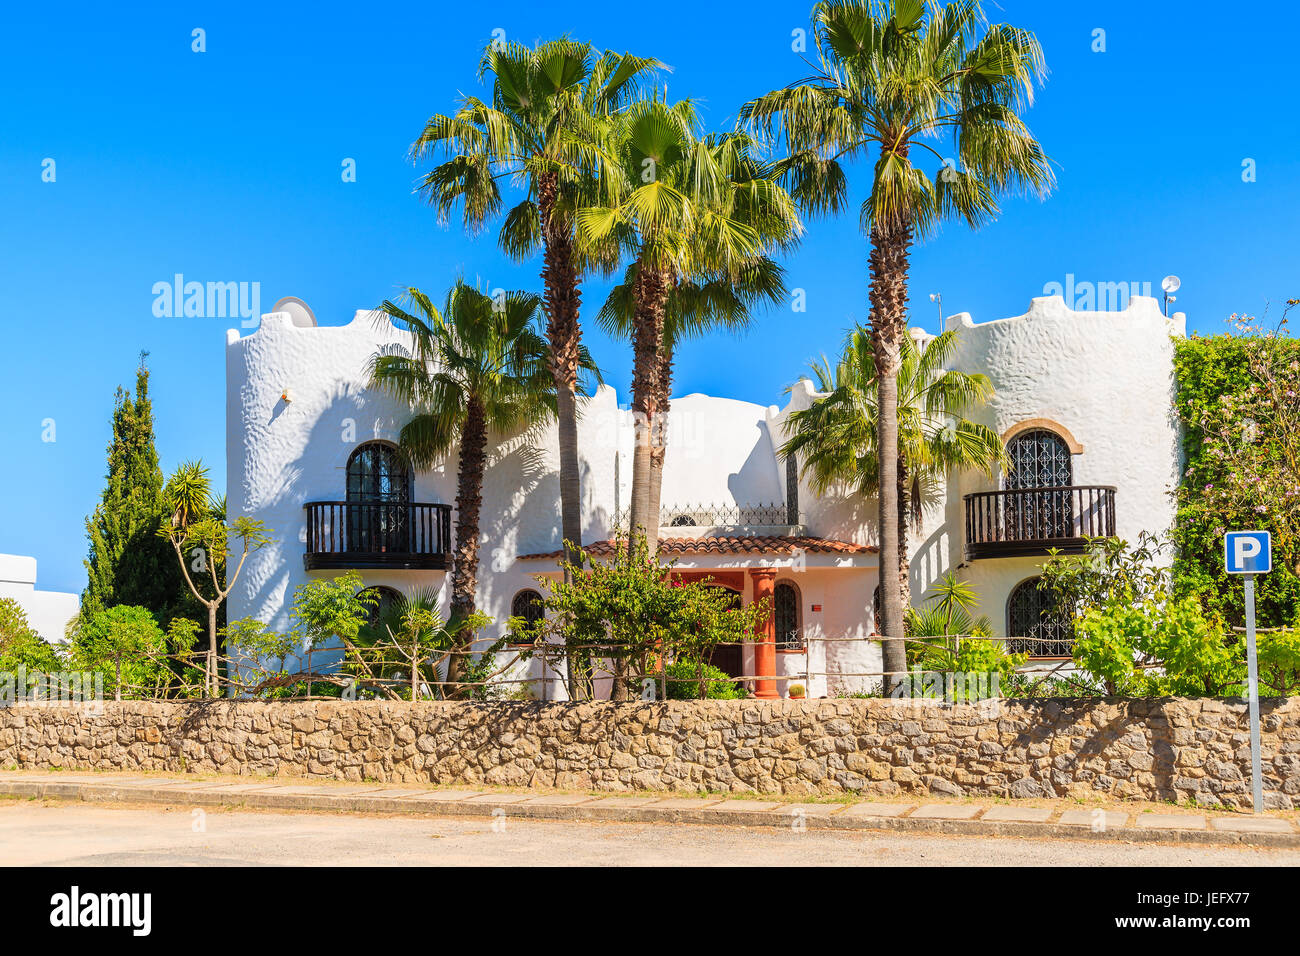 IBIZA ISLAND, SPAIN - MAY 20, 2-17: Luxury white colour holiday villa and tall palm trees in garden in Cala Nova area of Ibiza island, Spain. Stock Photo